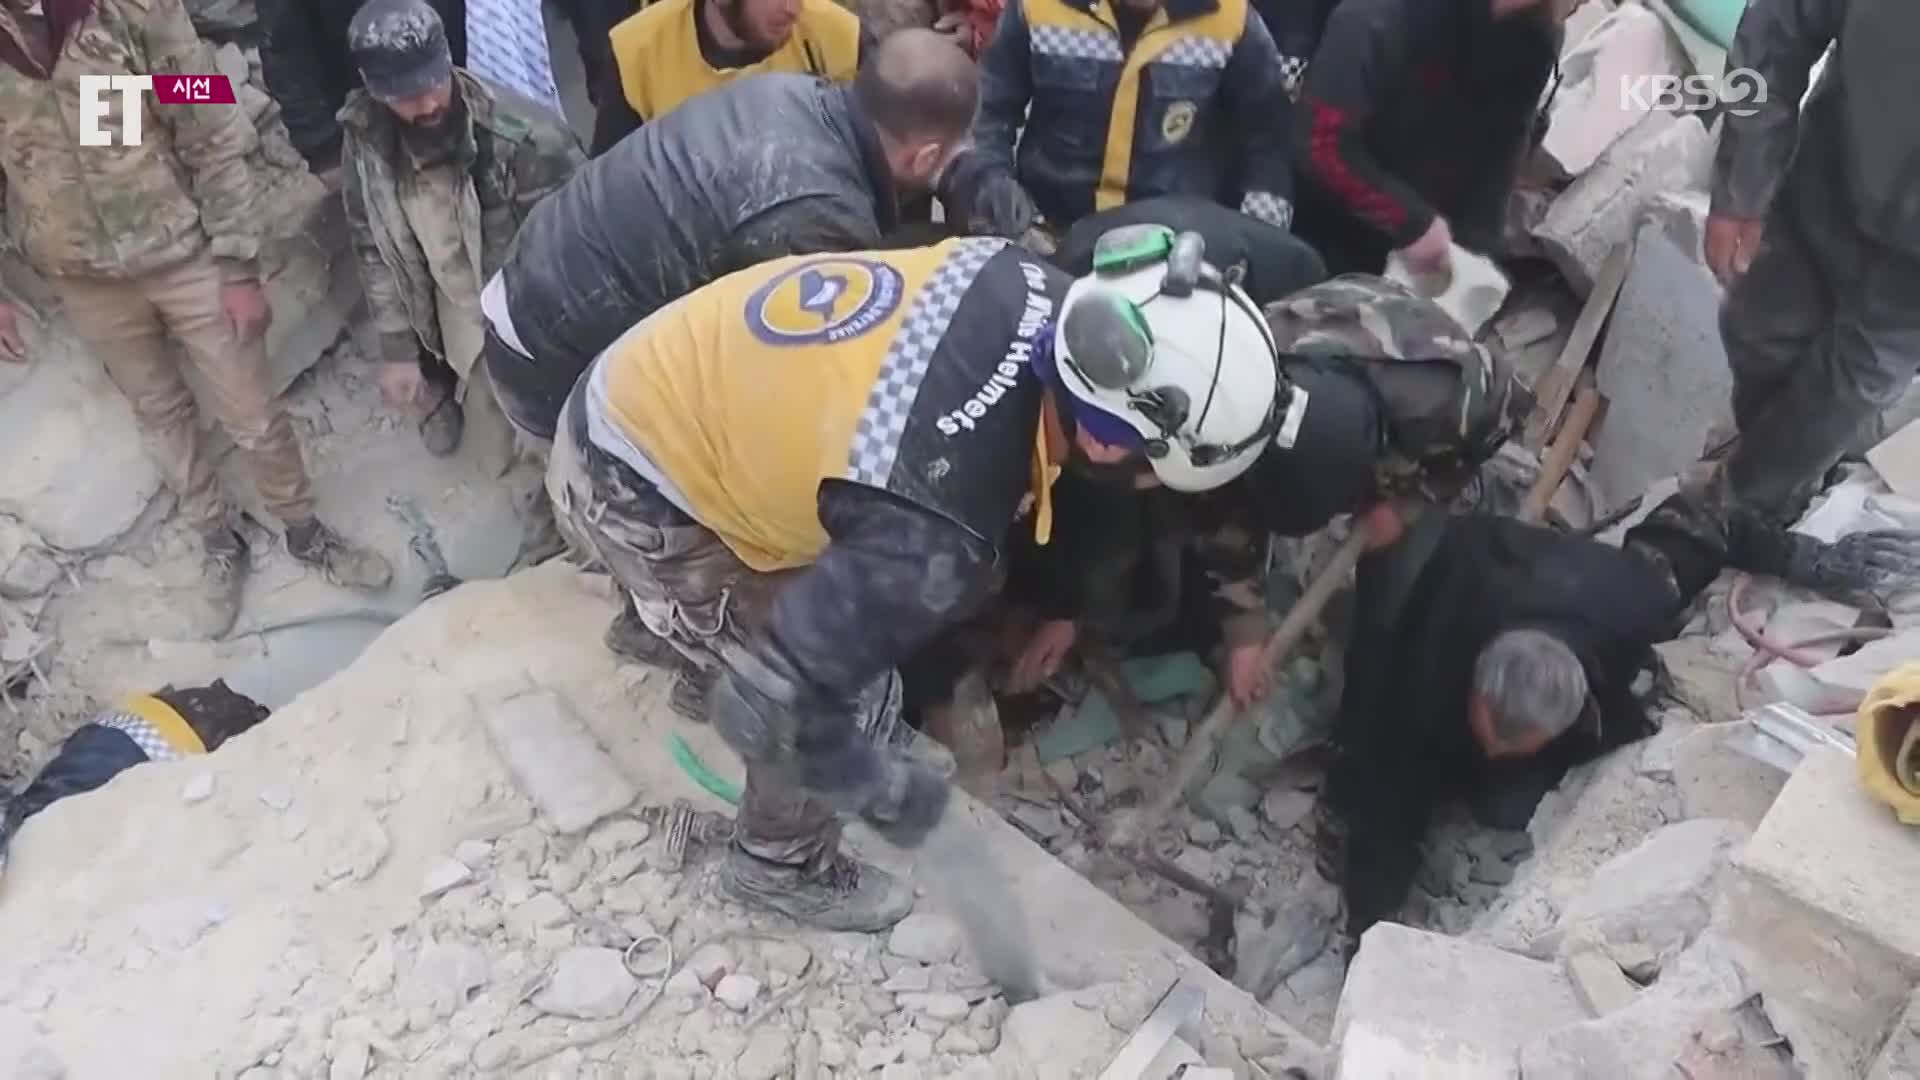 [ET] 맨손으로 생존자 구한 ‘하얀 헬멧’마저…시리아의 비극